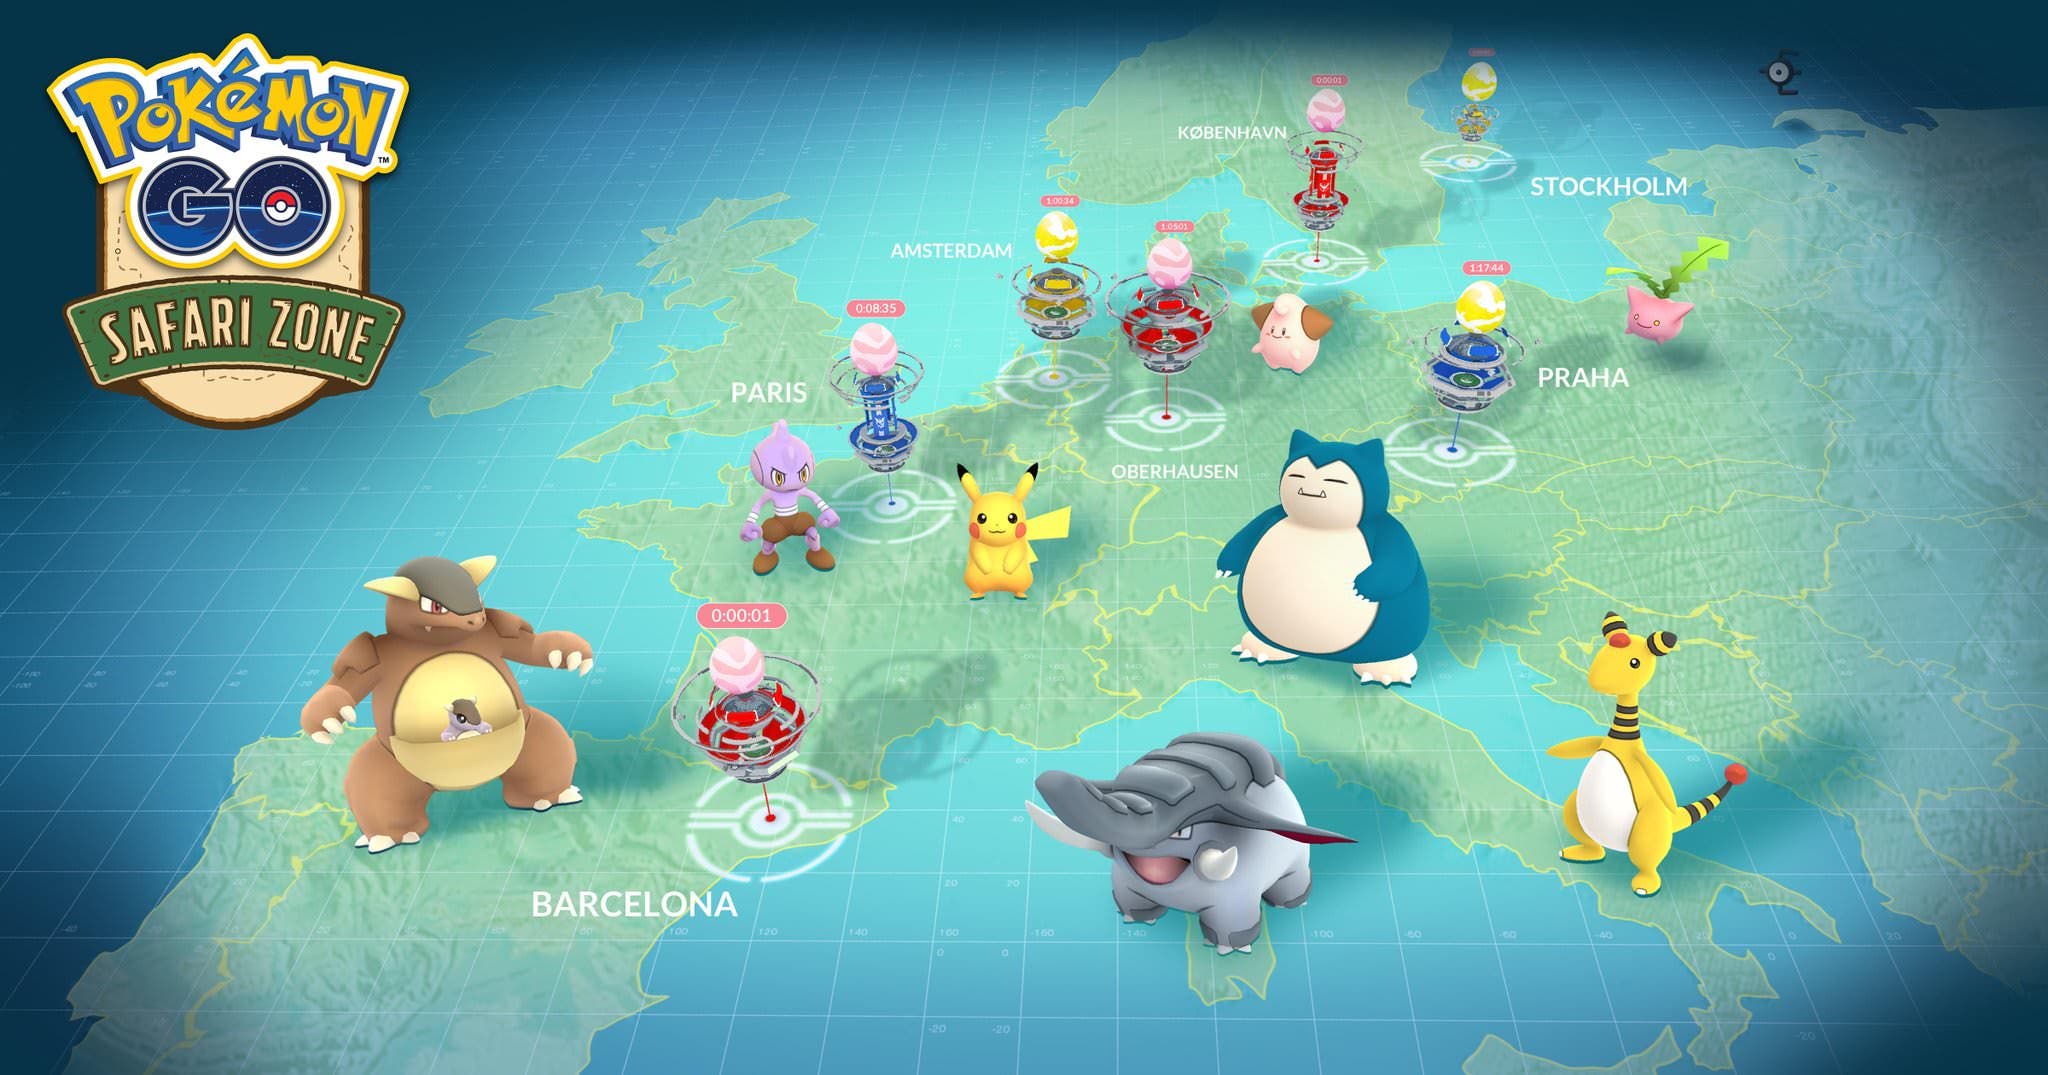 Anunciados eventos mundiales para Pokémon GO, incluyendo Safari Zone en España